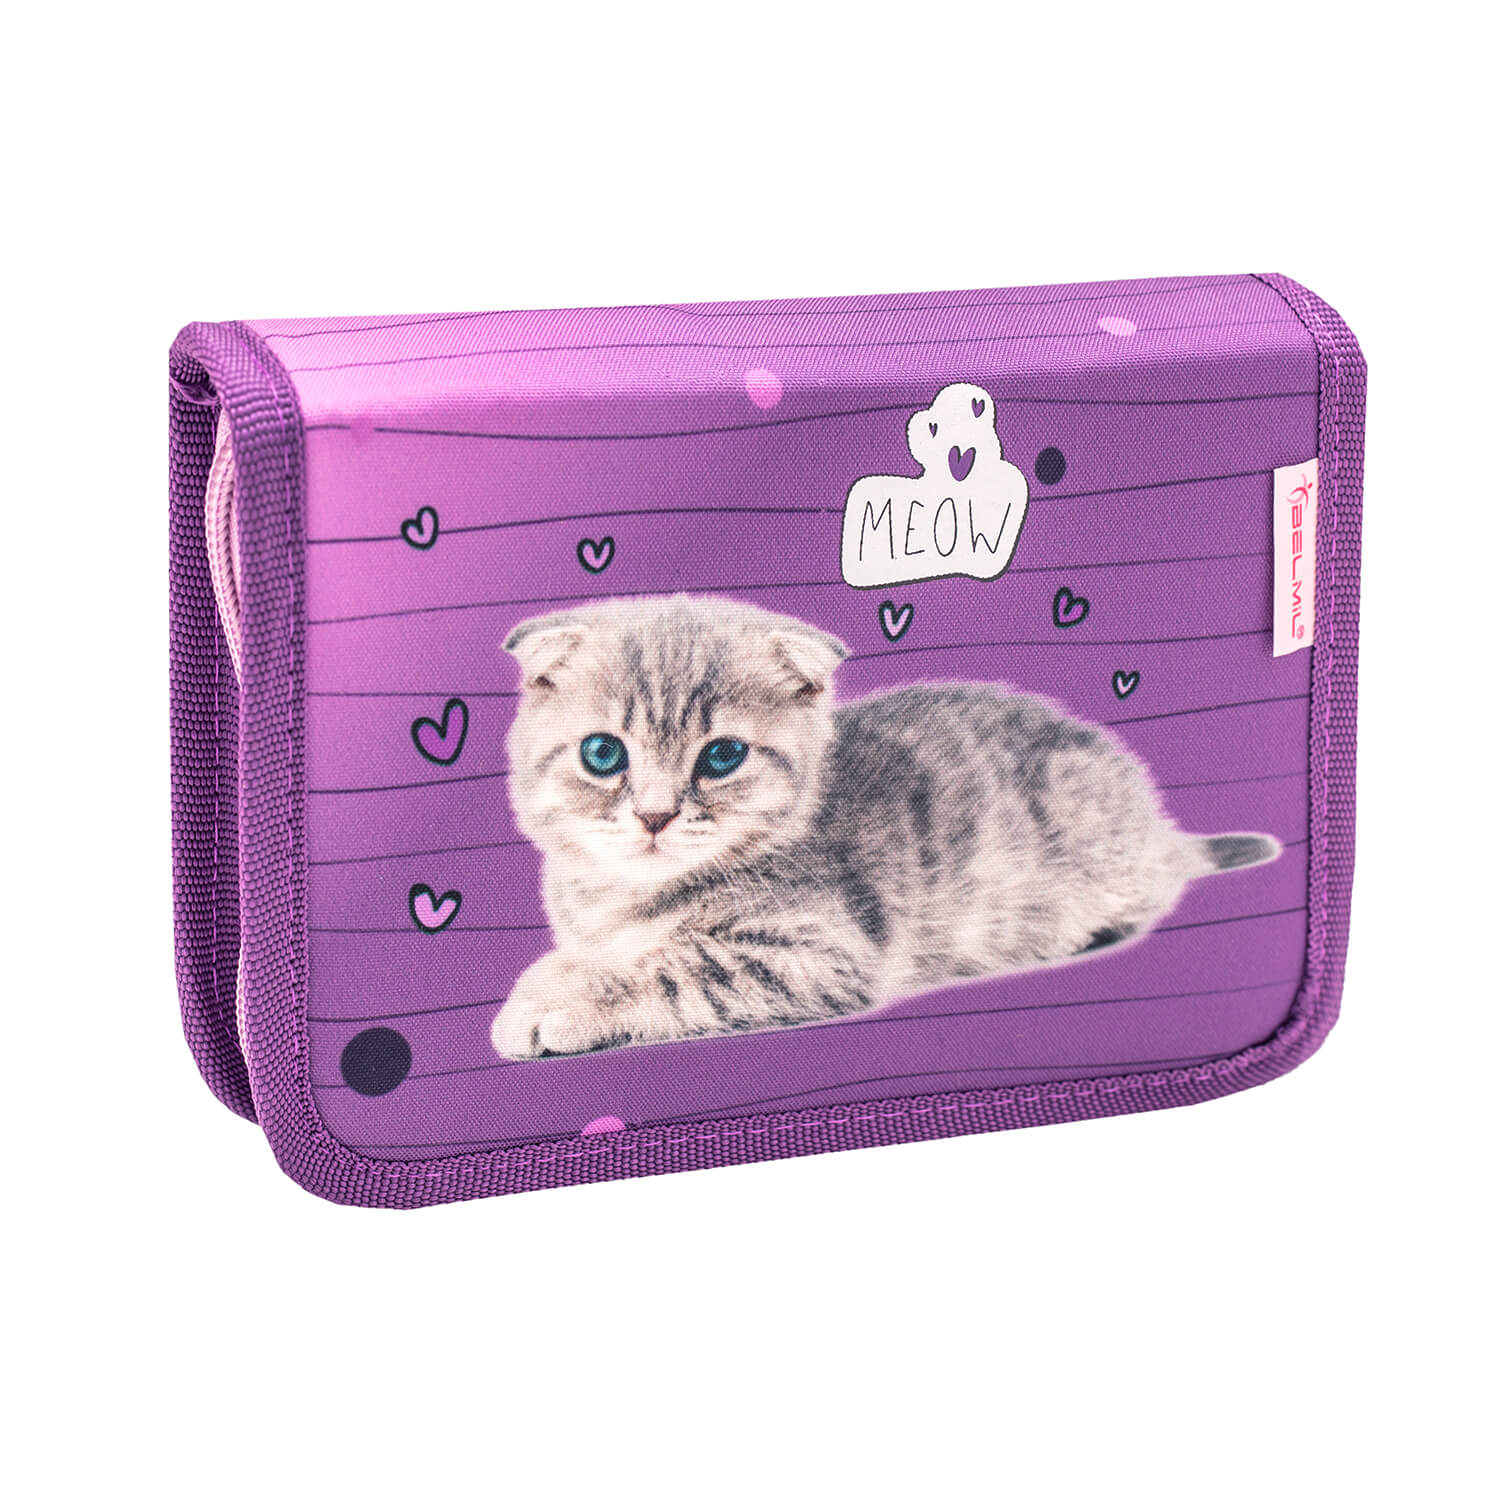 Customize Me Little Caty schoolbag set 5 pcs